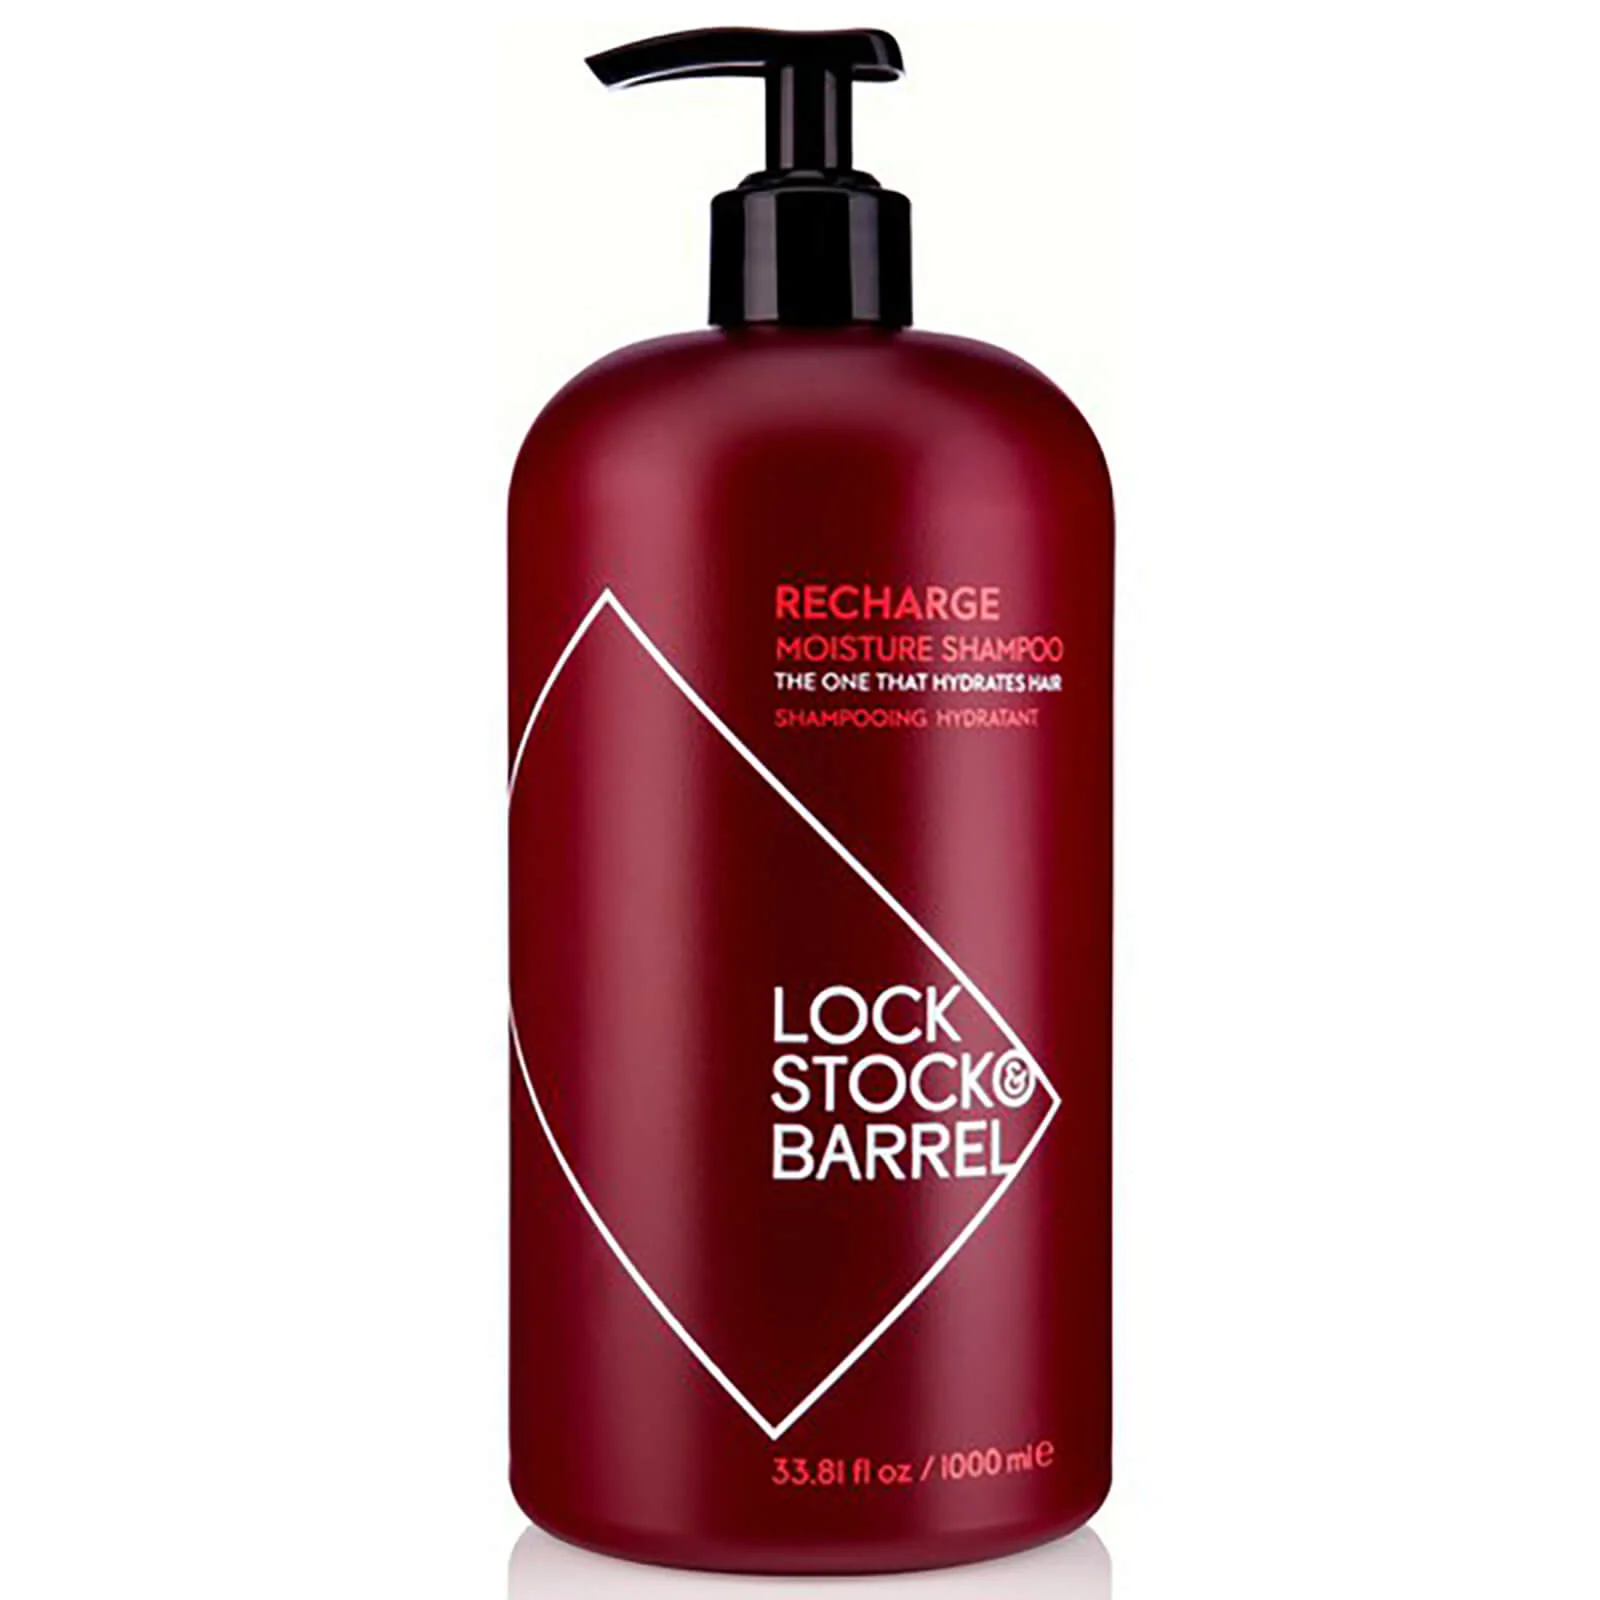 Lock Stock & Barrel Recharge Moisture Shampoo (1000ml) Image 1